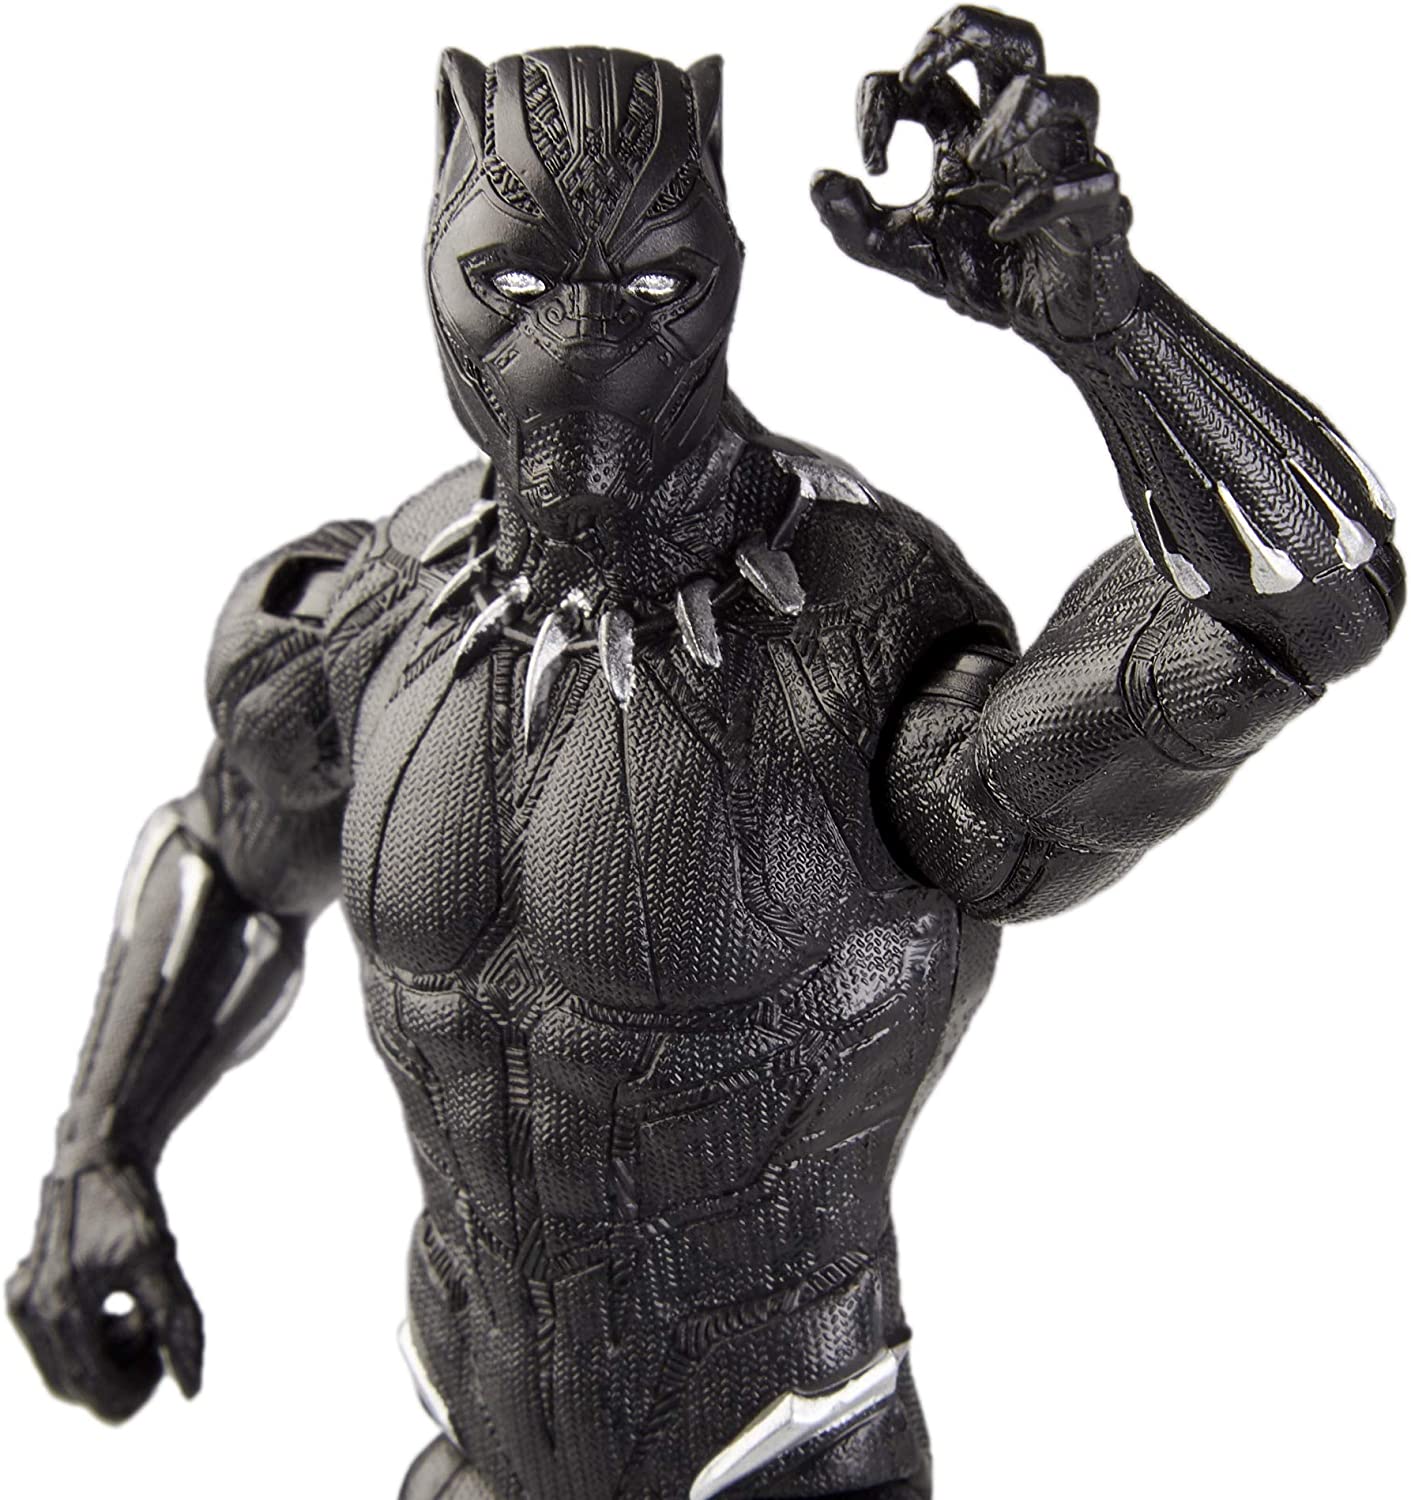 Black Panther Figura Avengers Endgame Original